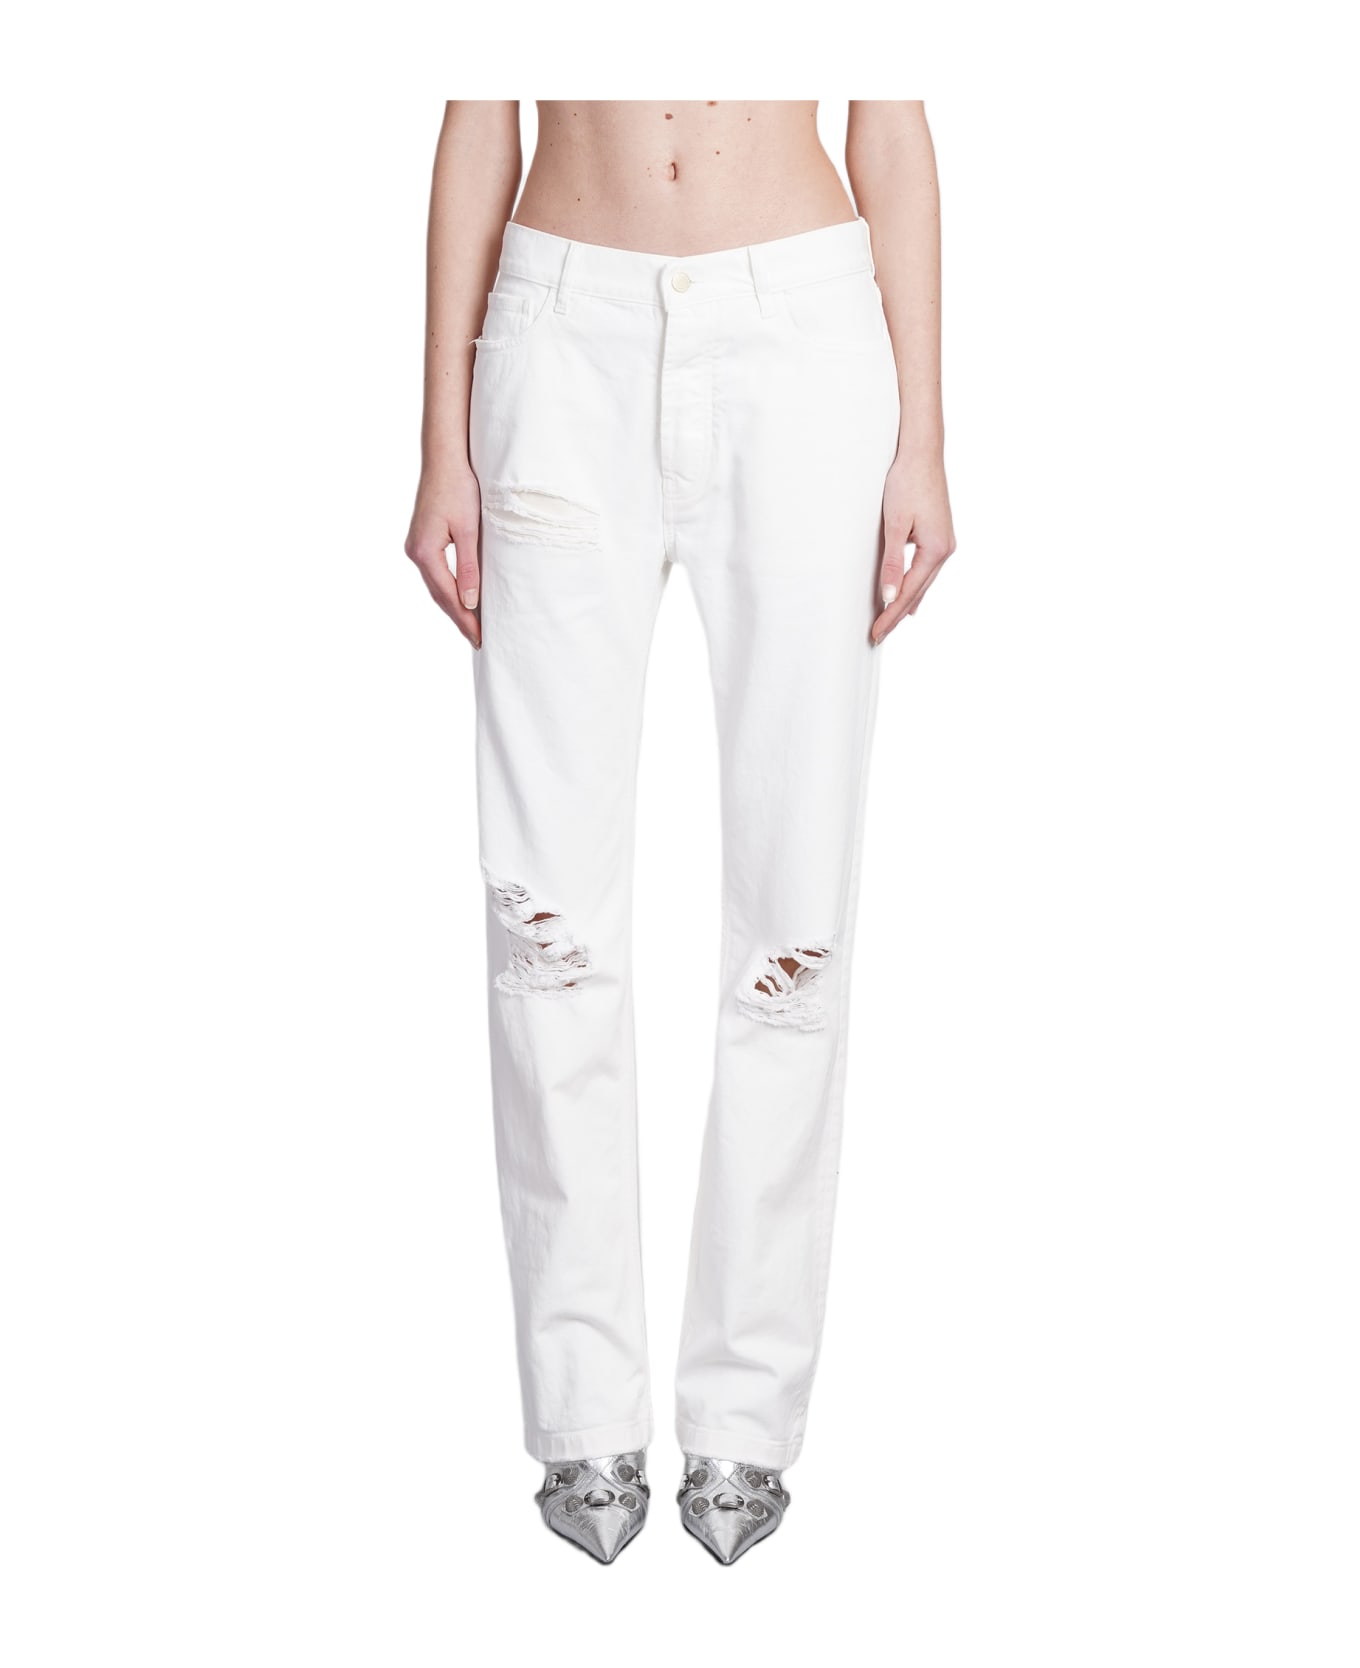 DARKPARK Naomi Jeans In White Cotton - white